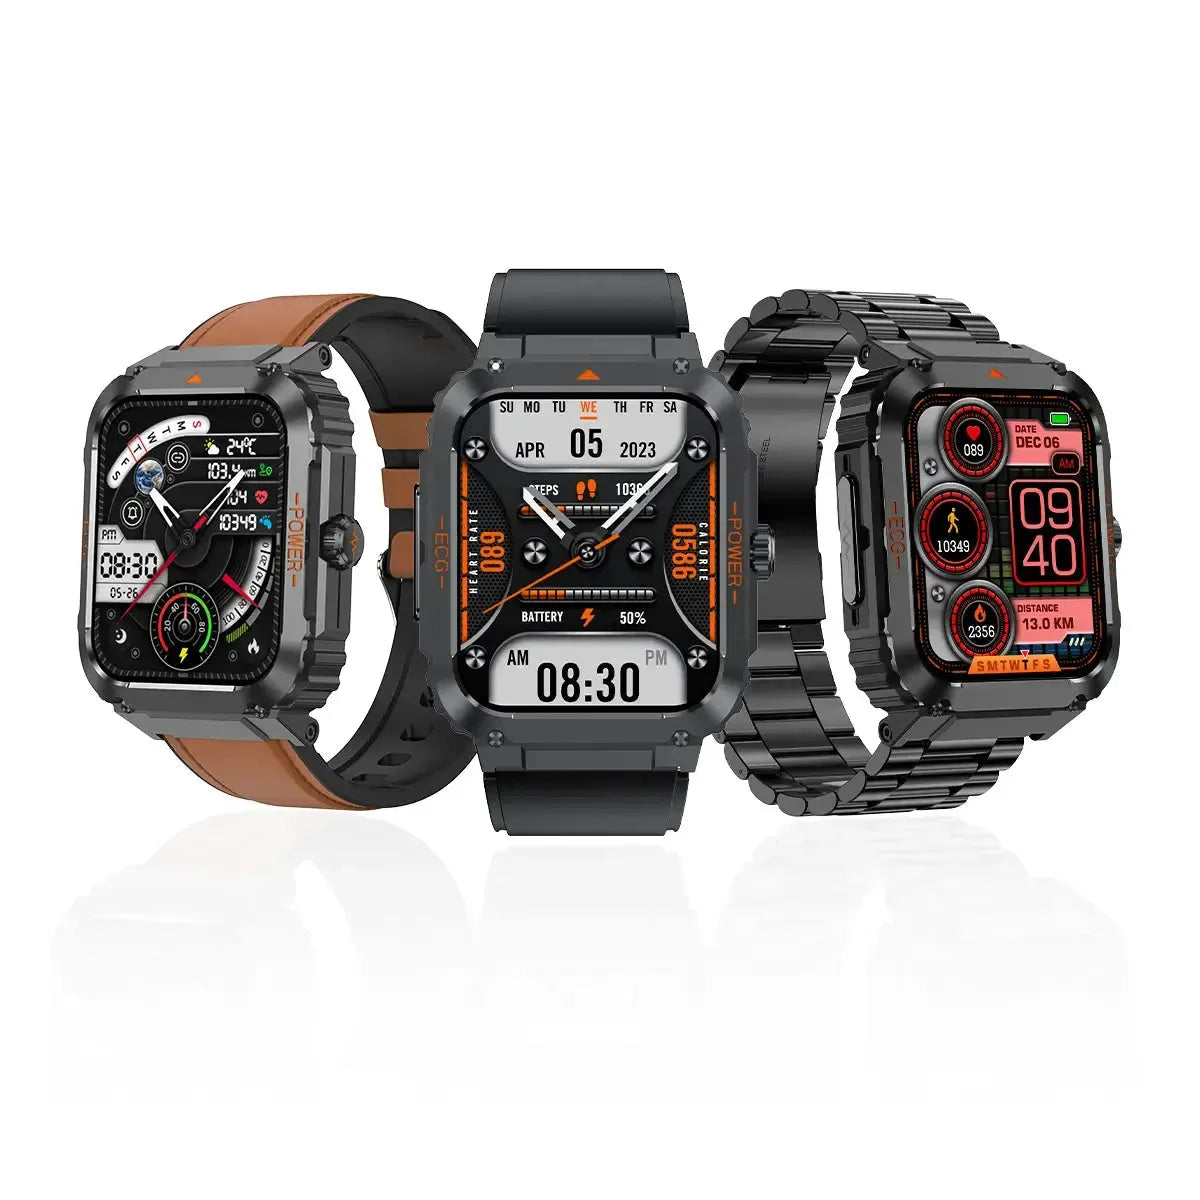 Tousains smartwatch S1 with three styles